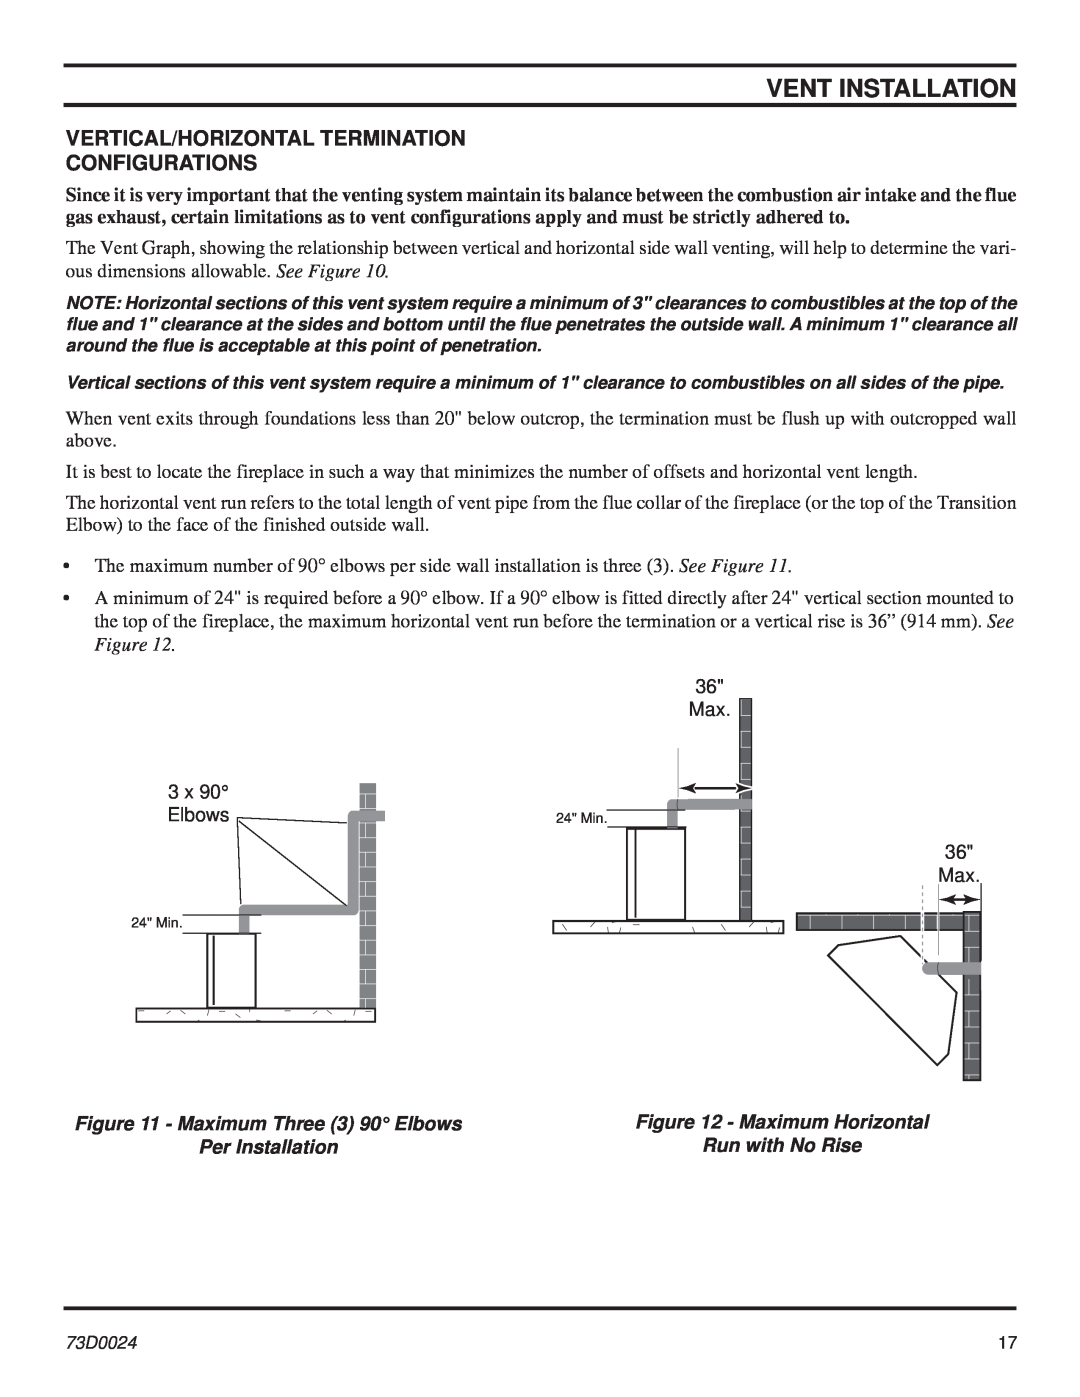 Monessen Hearth KHLDV SERIES manual Vertical/Horizontal Termination Configurations, Vent Installation, Per Installation 